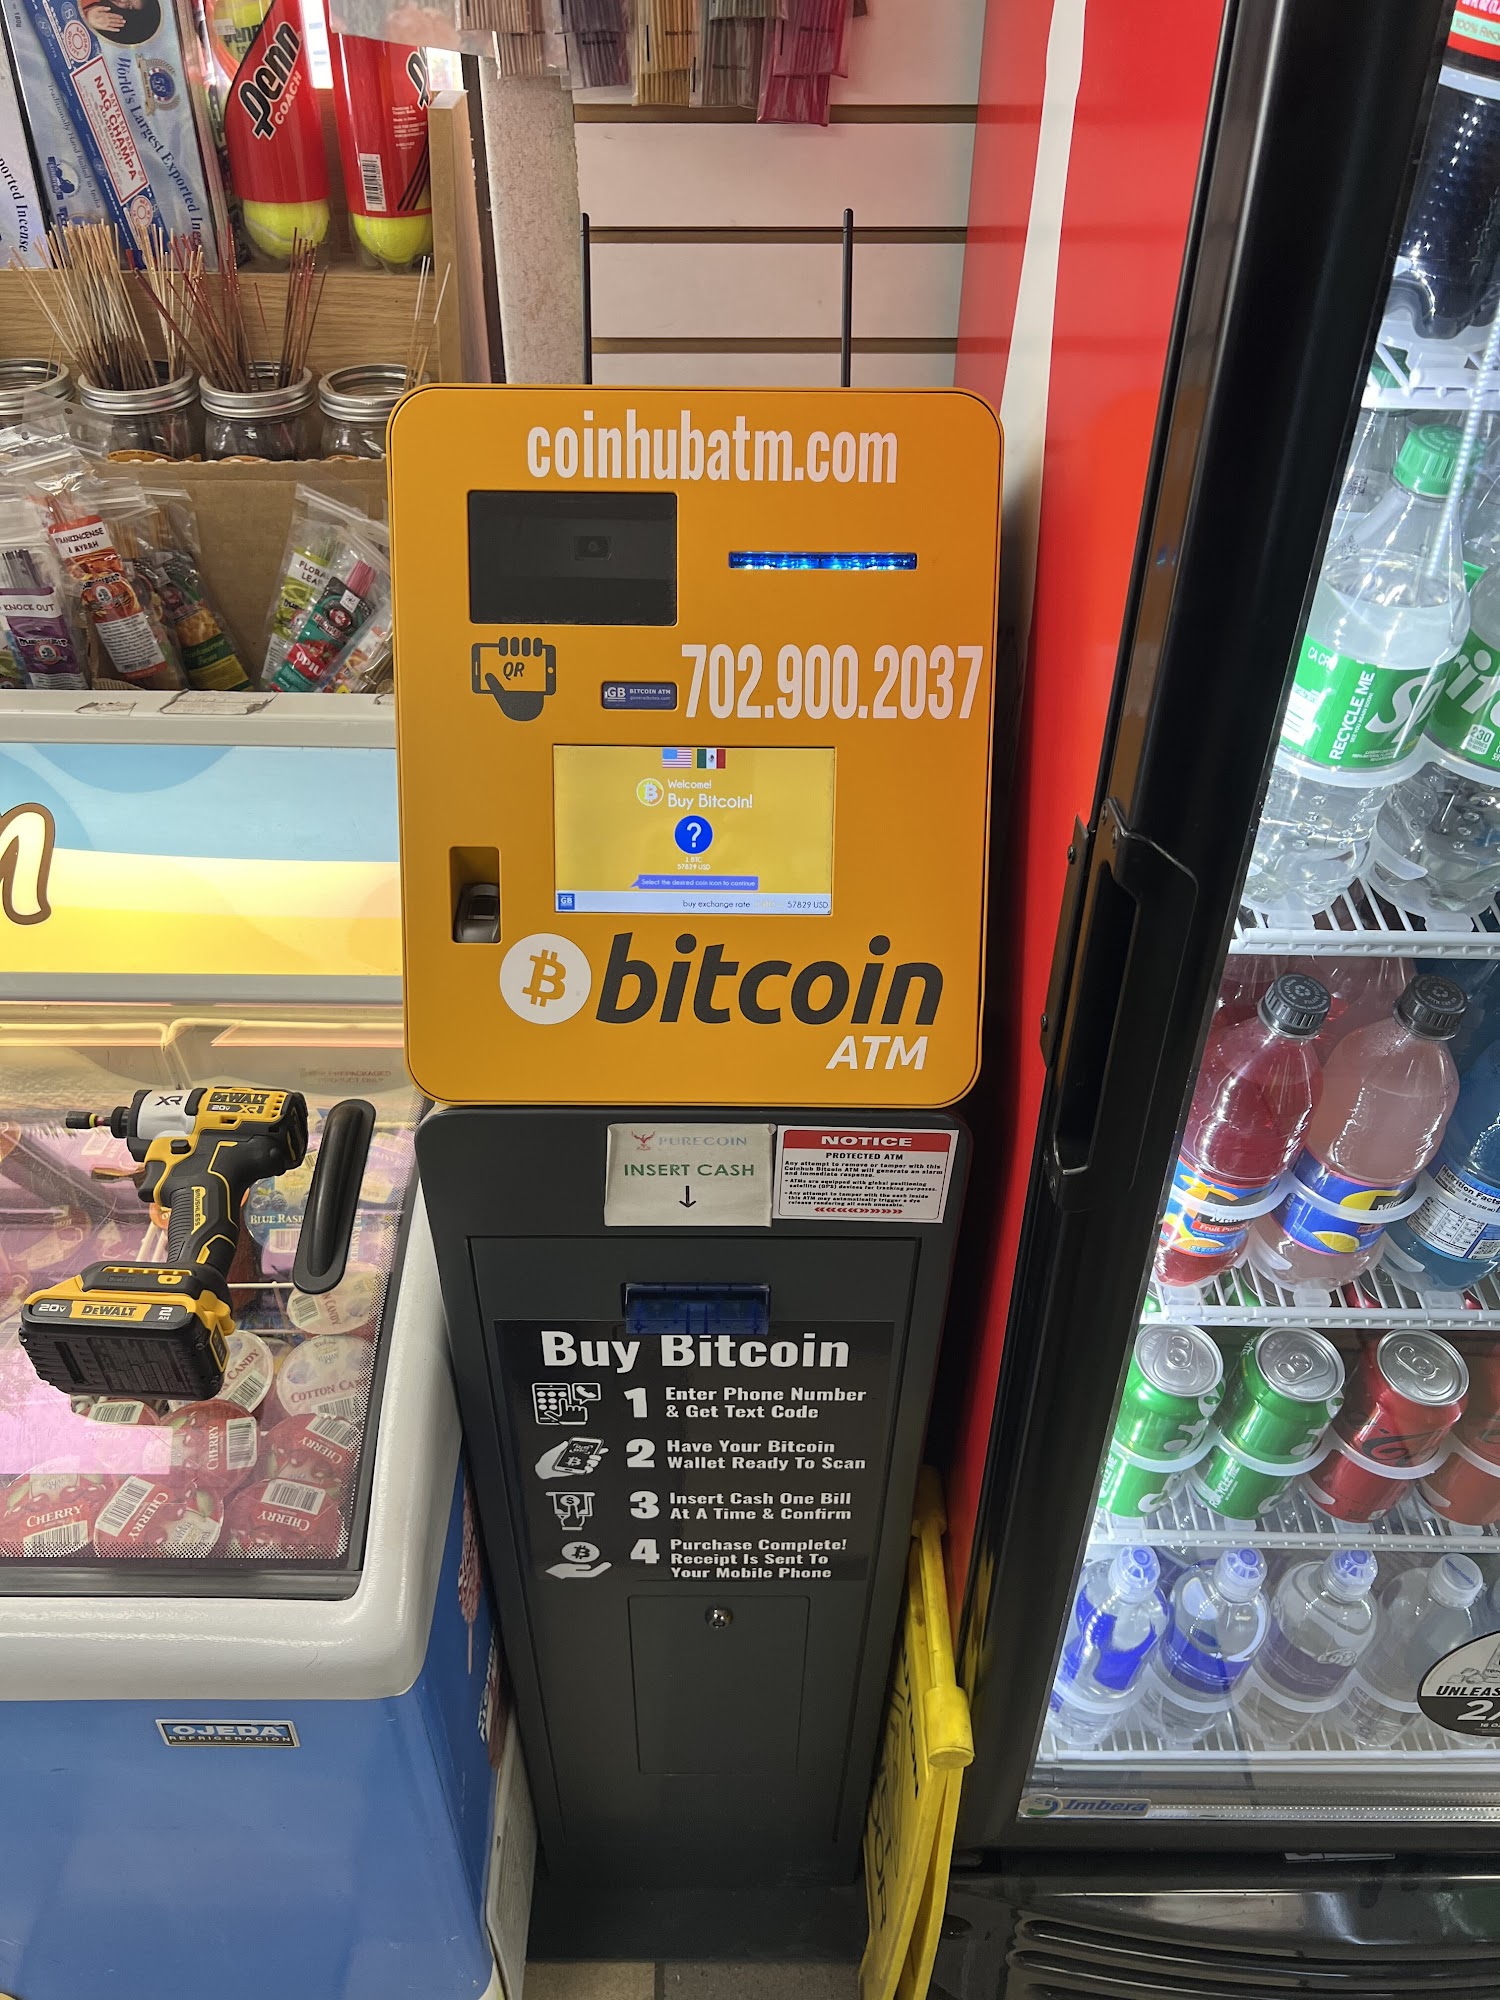 Bitcoin ATM Spencer - Coinhub